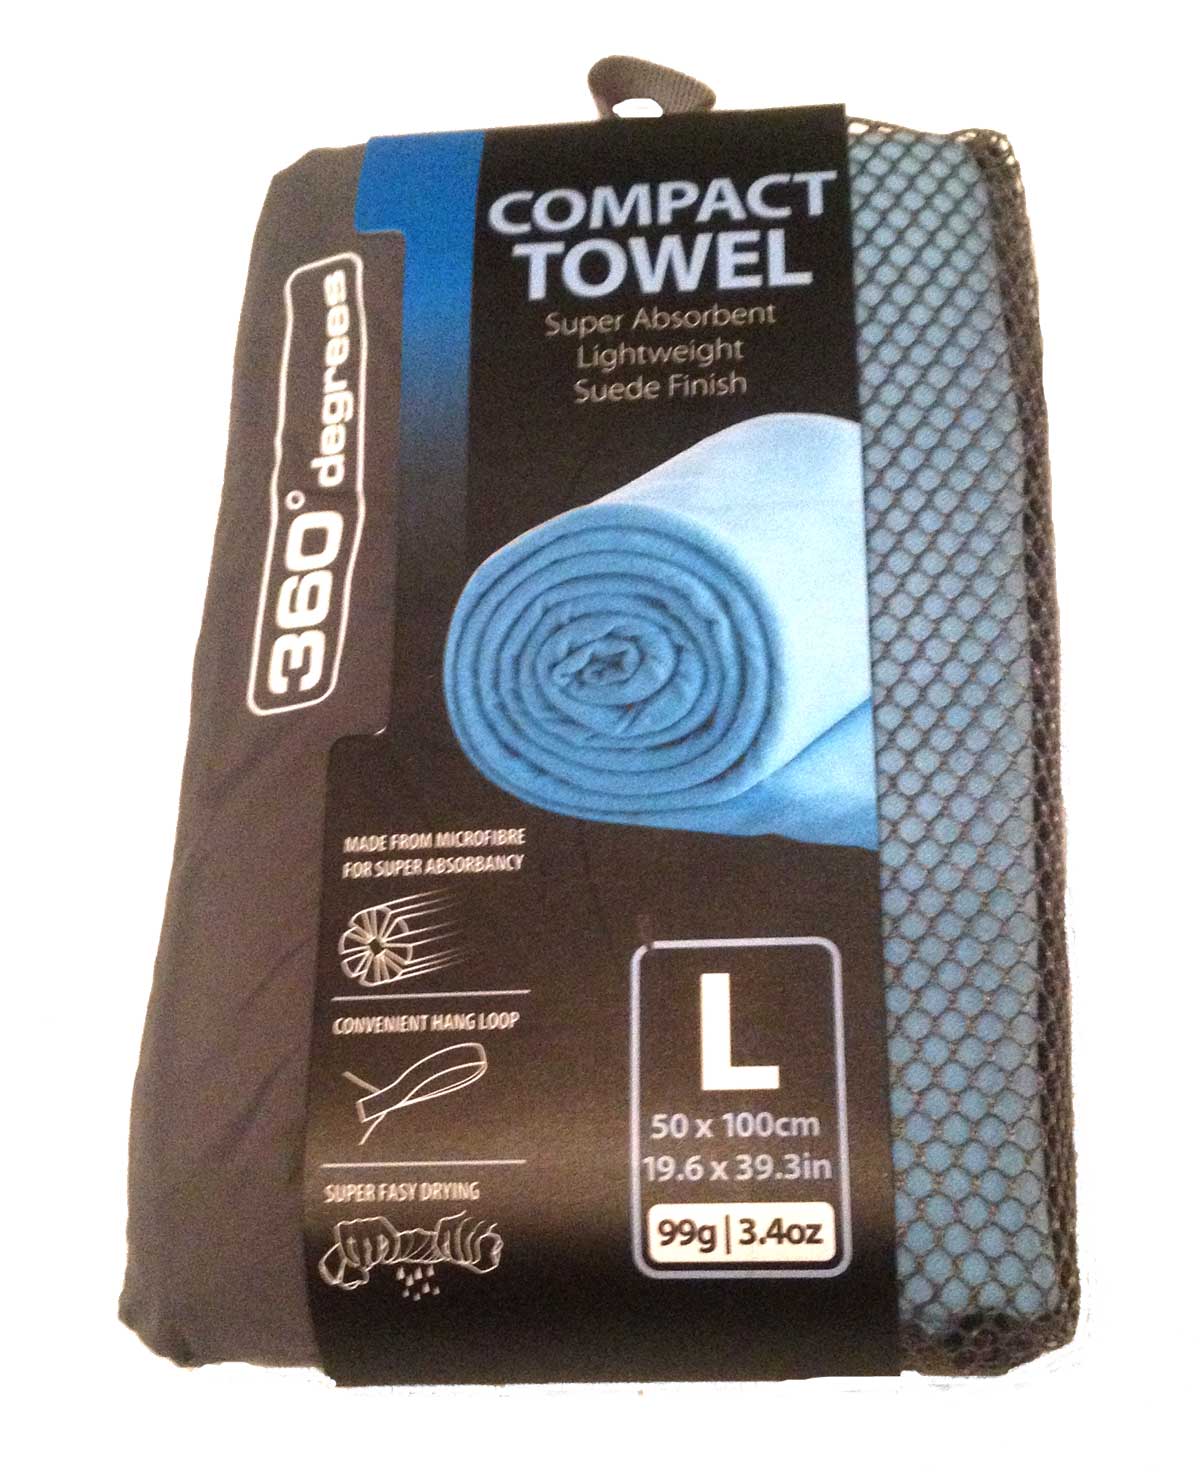 360 Compact Travel microfibre towel